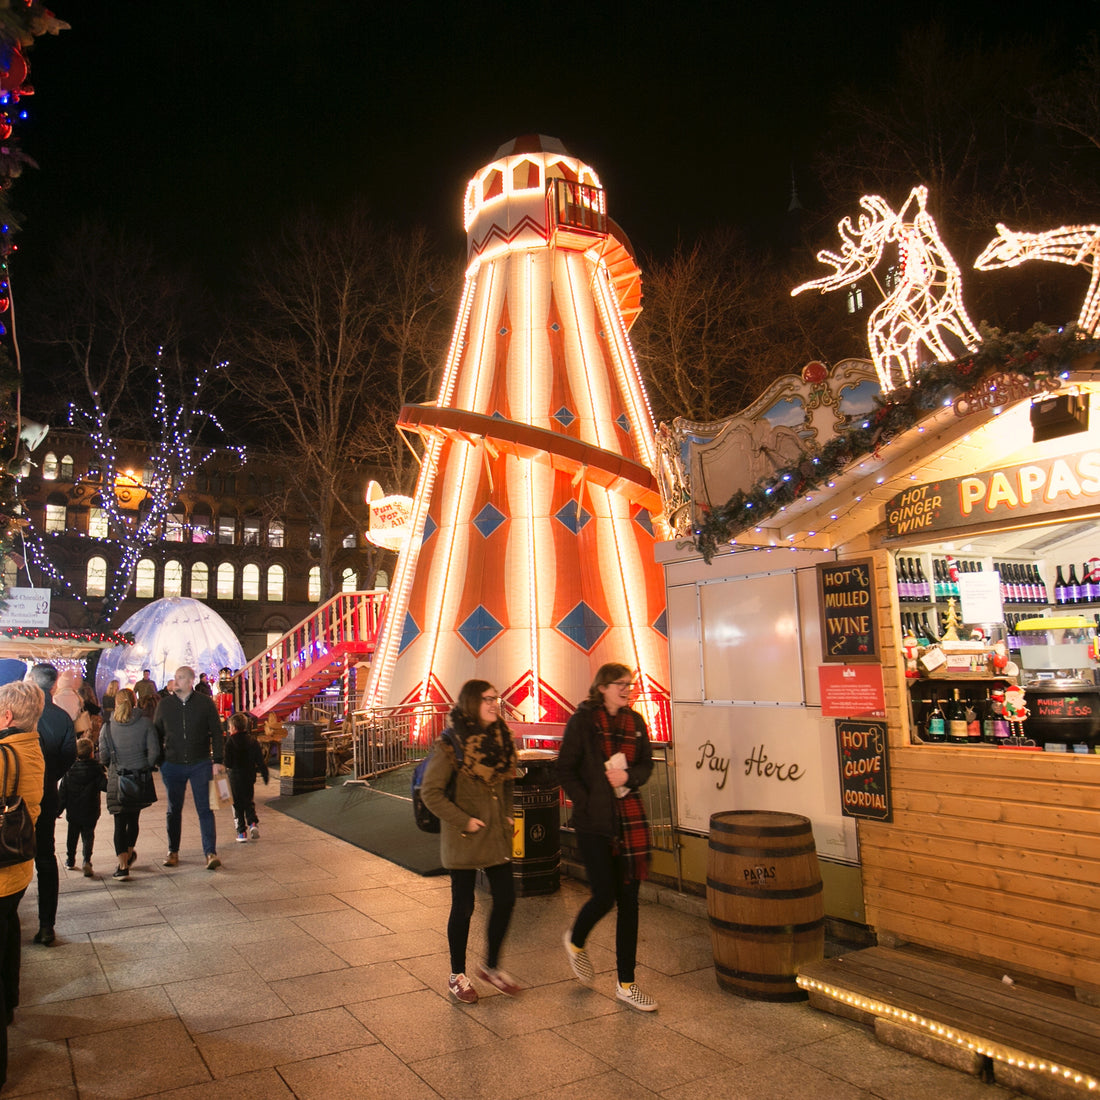 Belfast Christmas Market returns this weekend